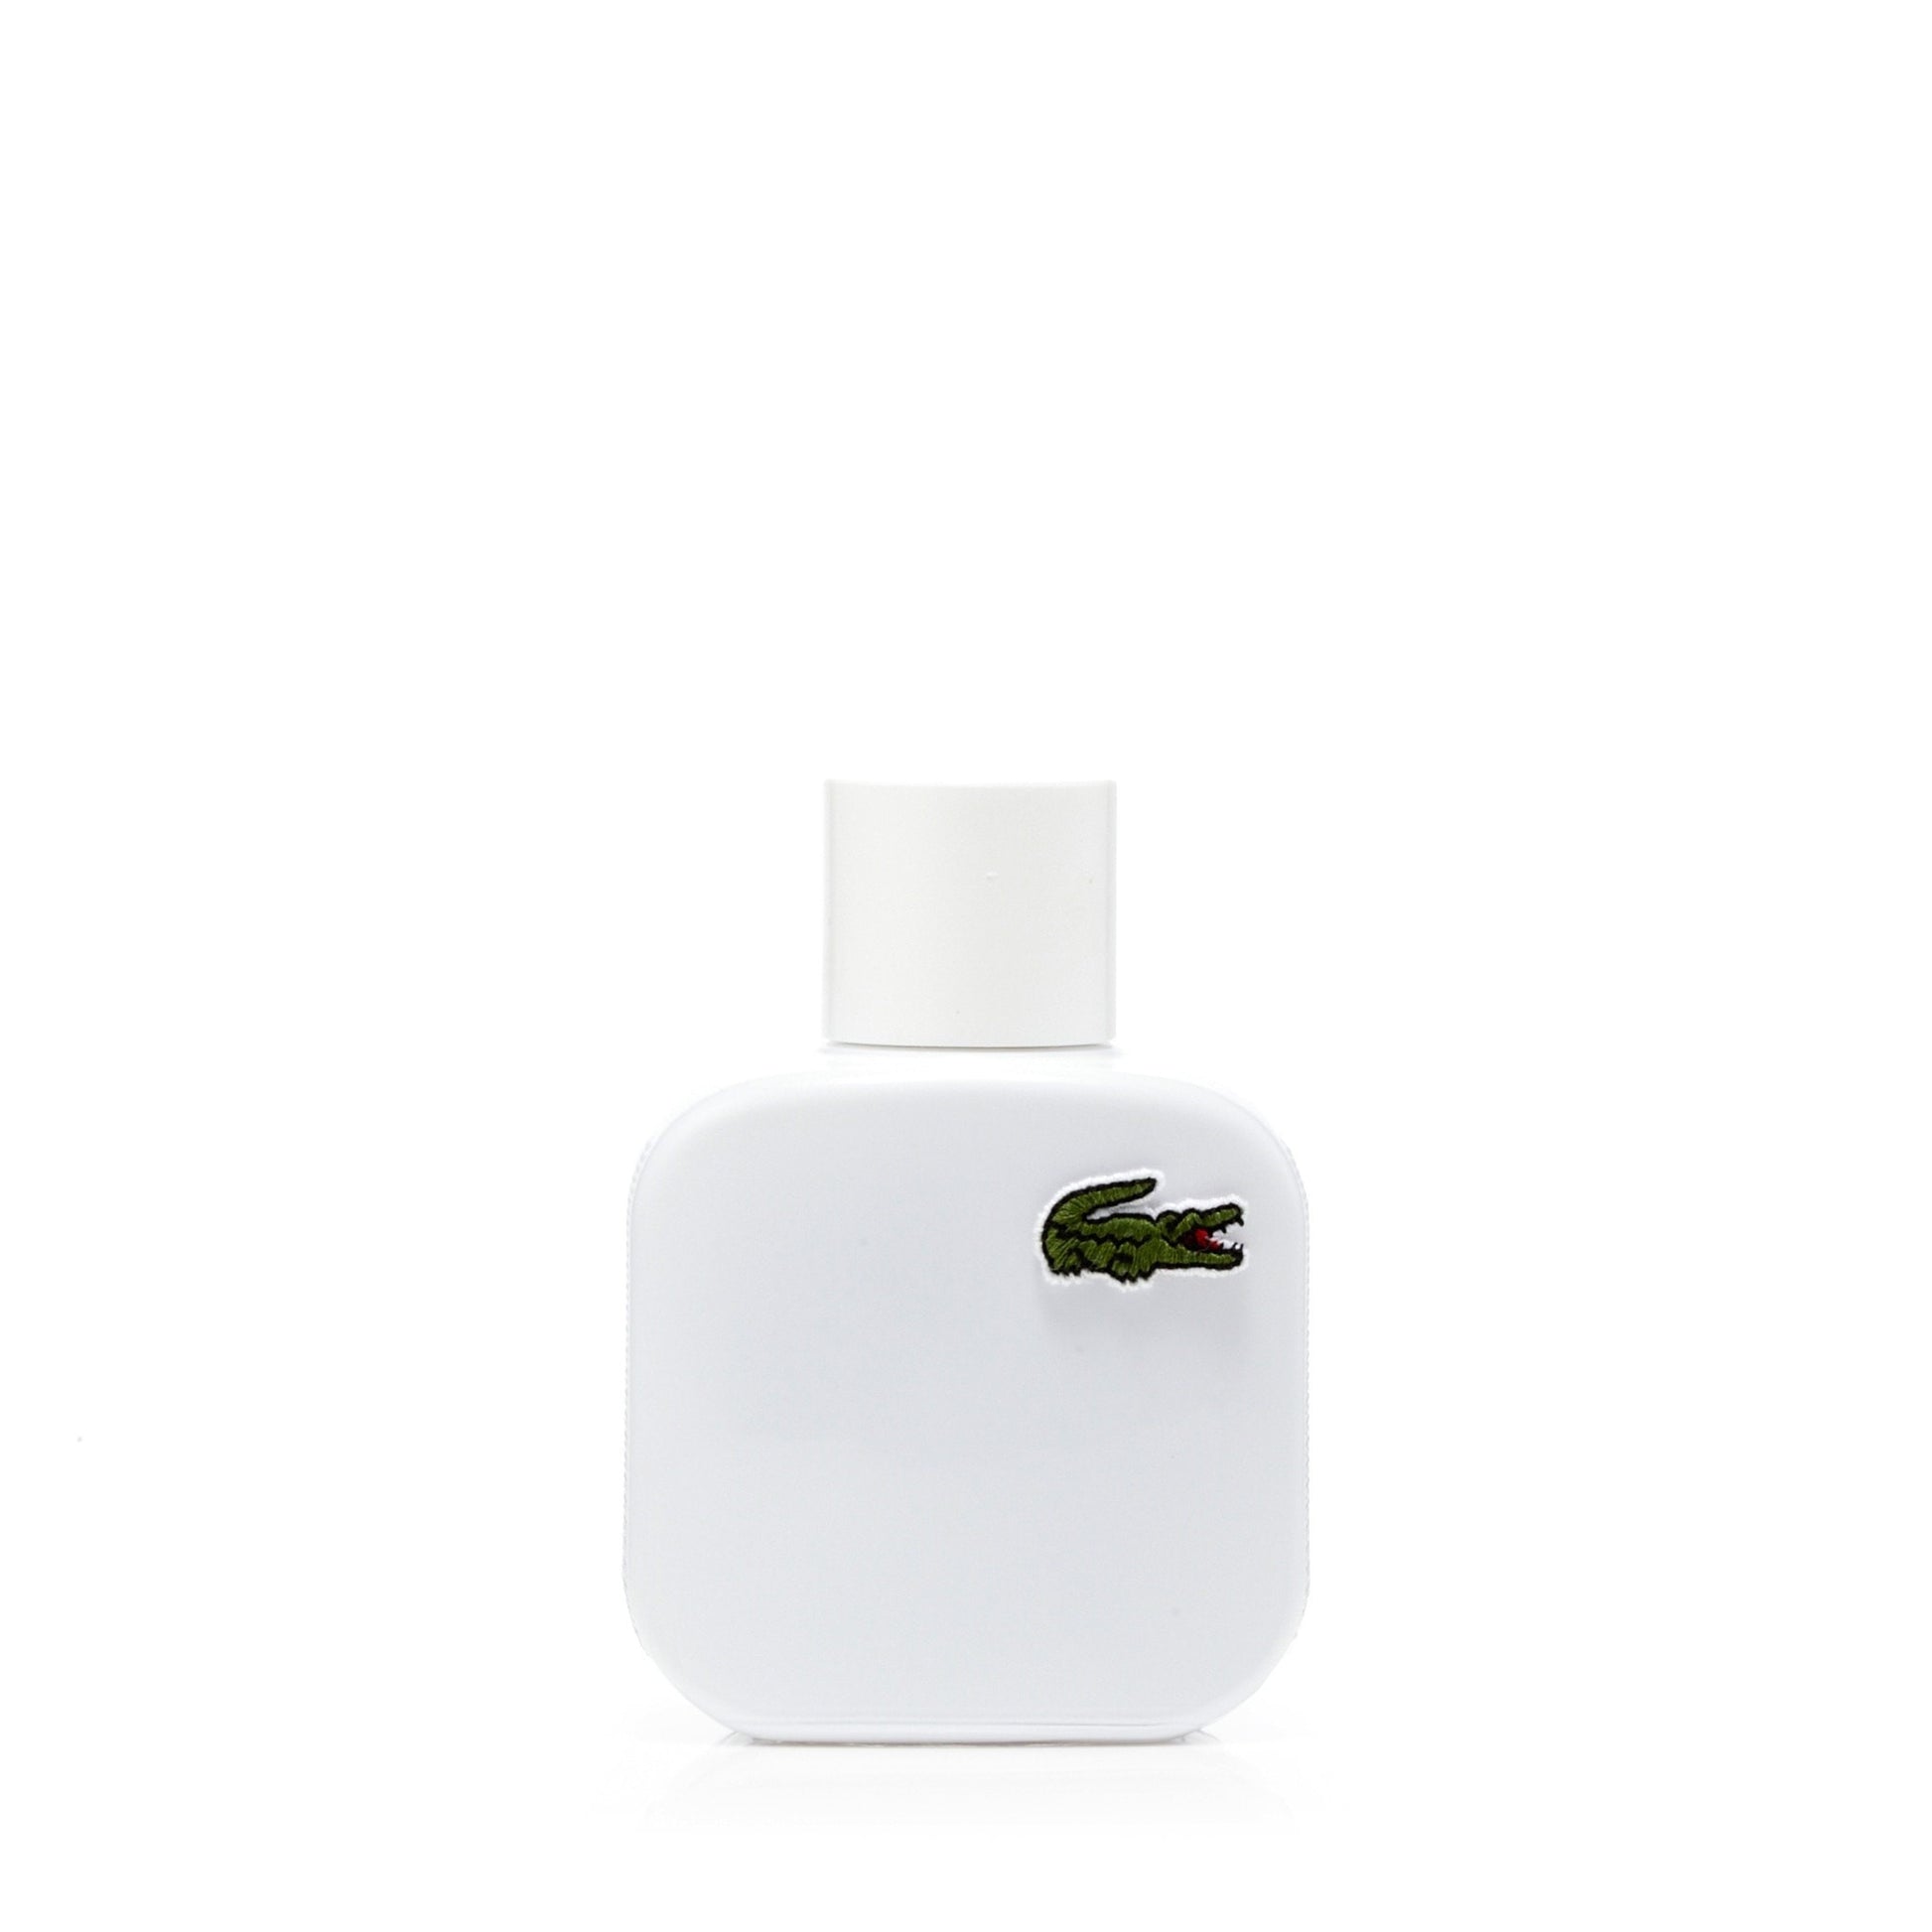 Lacoste L.12.12 Blanc Eau de Toilette Mens Spray 1.7 oz. Click to open in modal